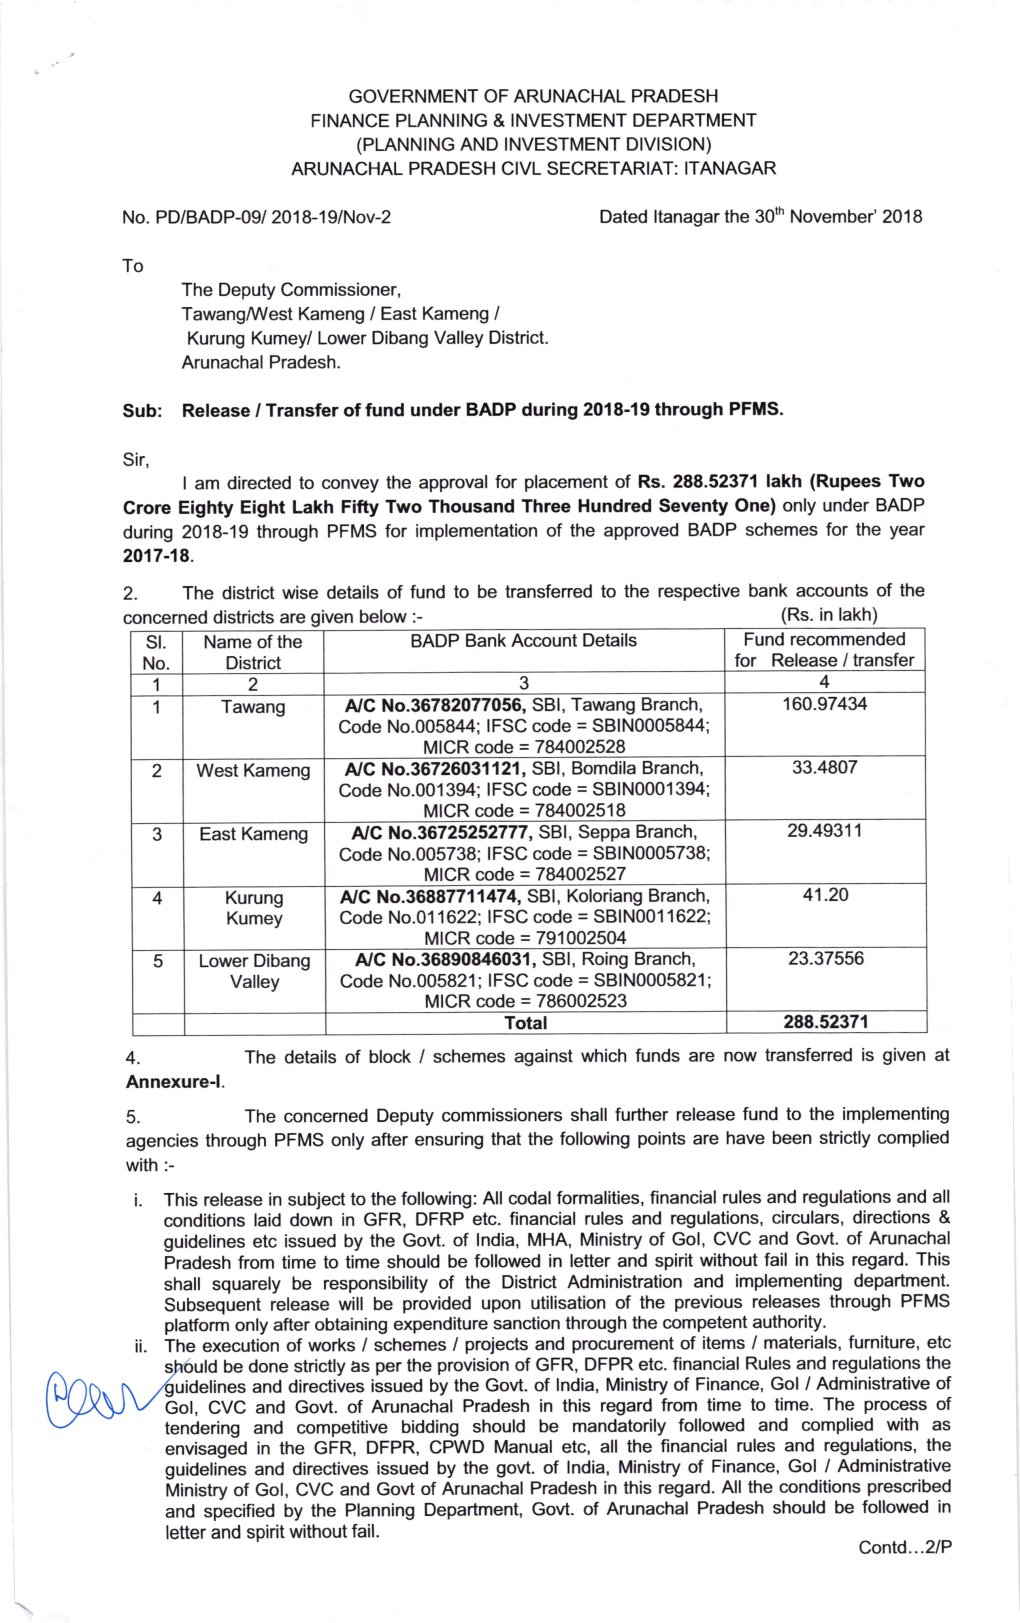 Release / Transfer of Fund Under BADP During 2018-19 Through PFMS